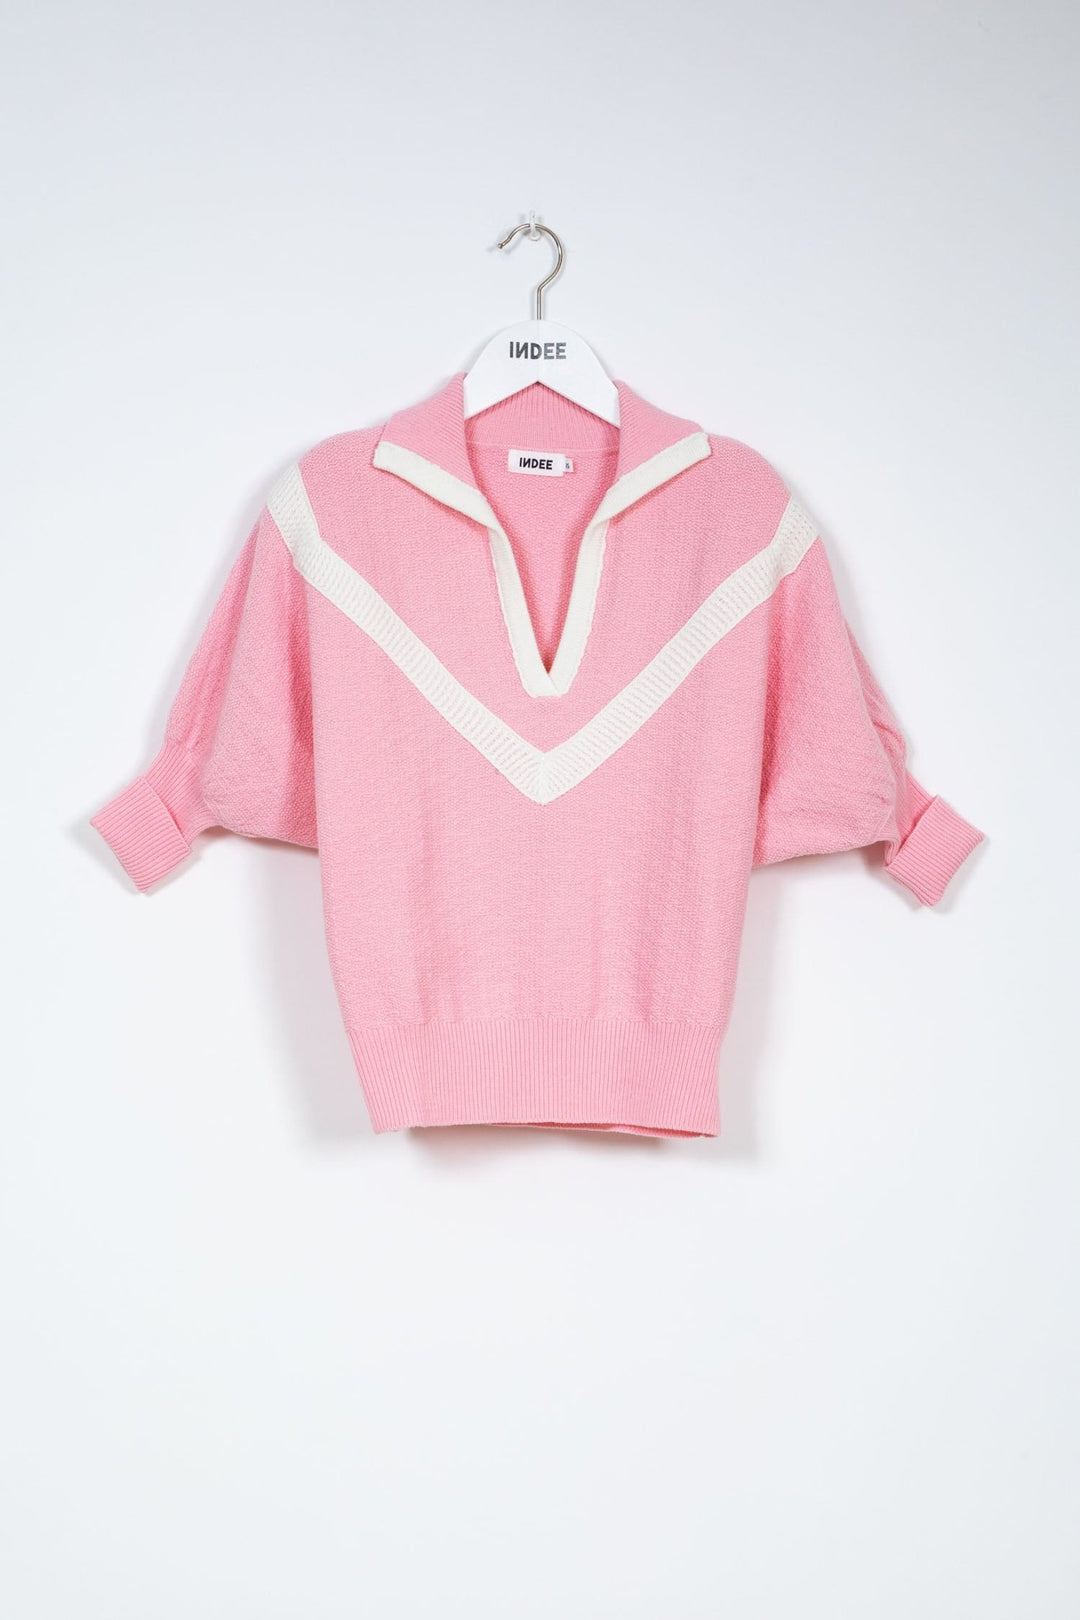 MultiColor CN Sweatshirt - Candy Pink - Posh New York